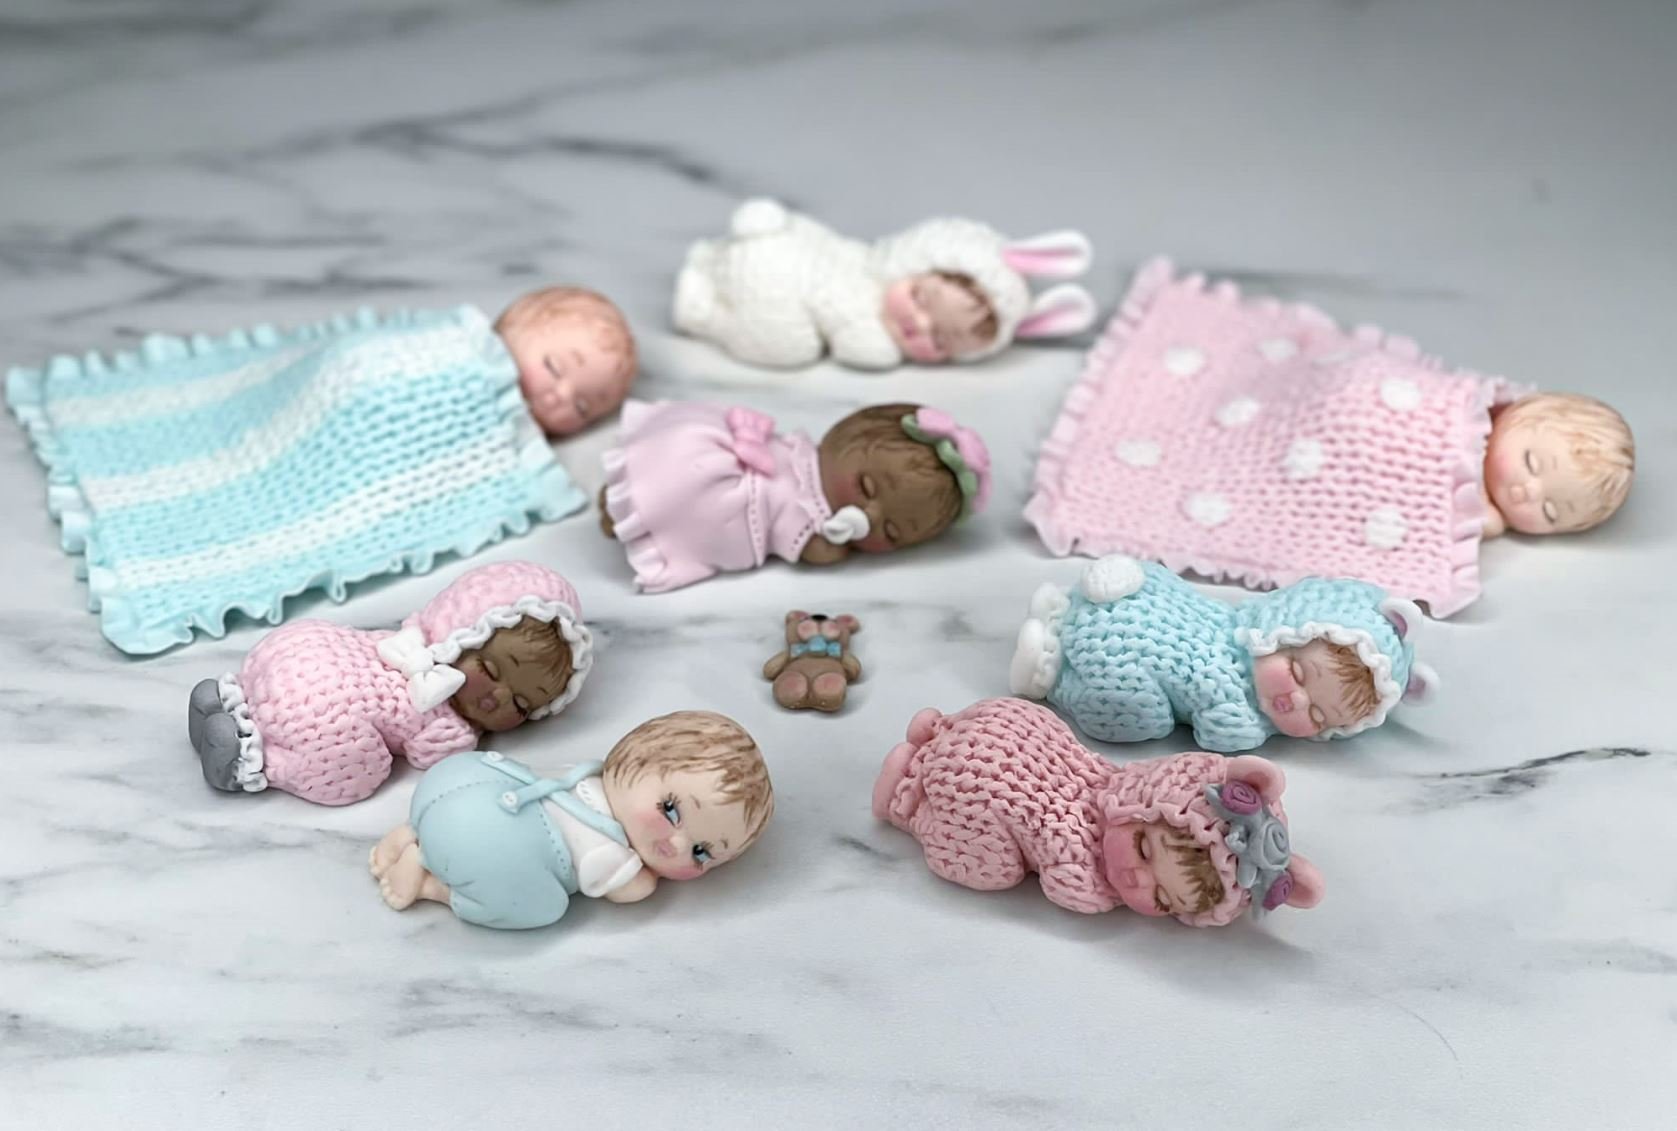 Mould 3D Sleeping Baby - Dressed Karen Davies - Last Chance